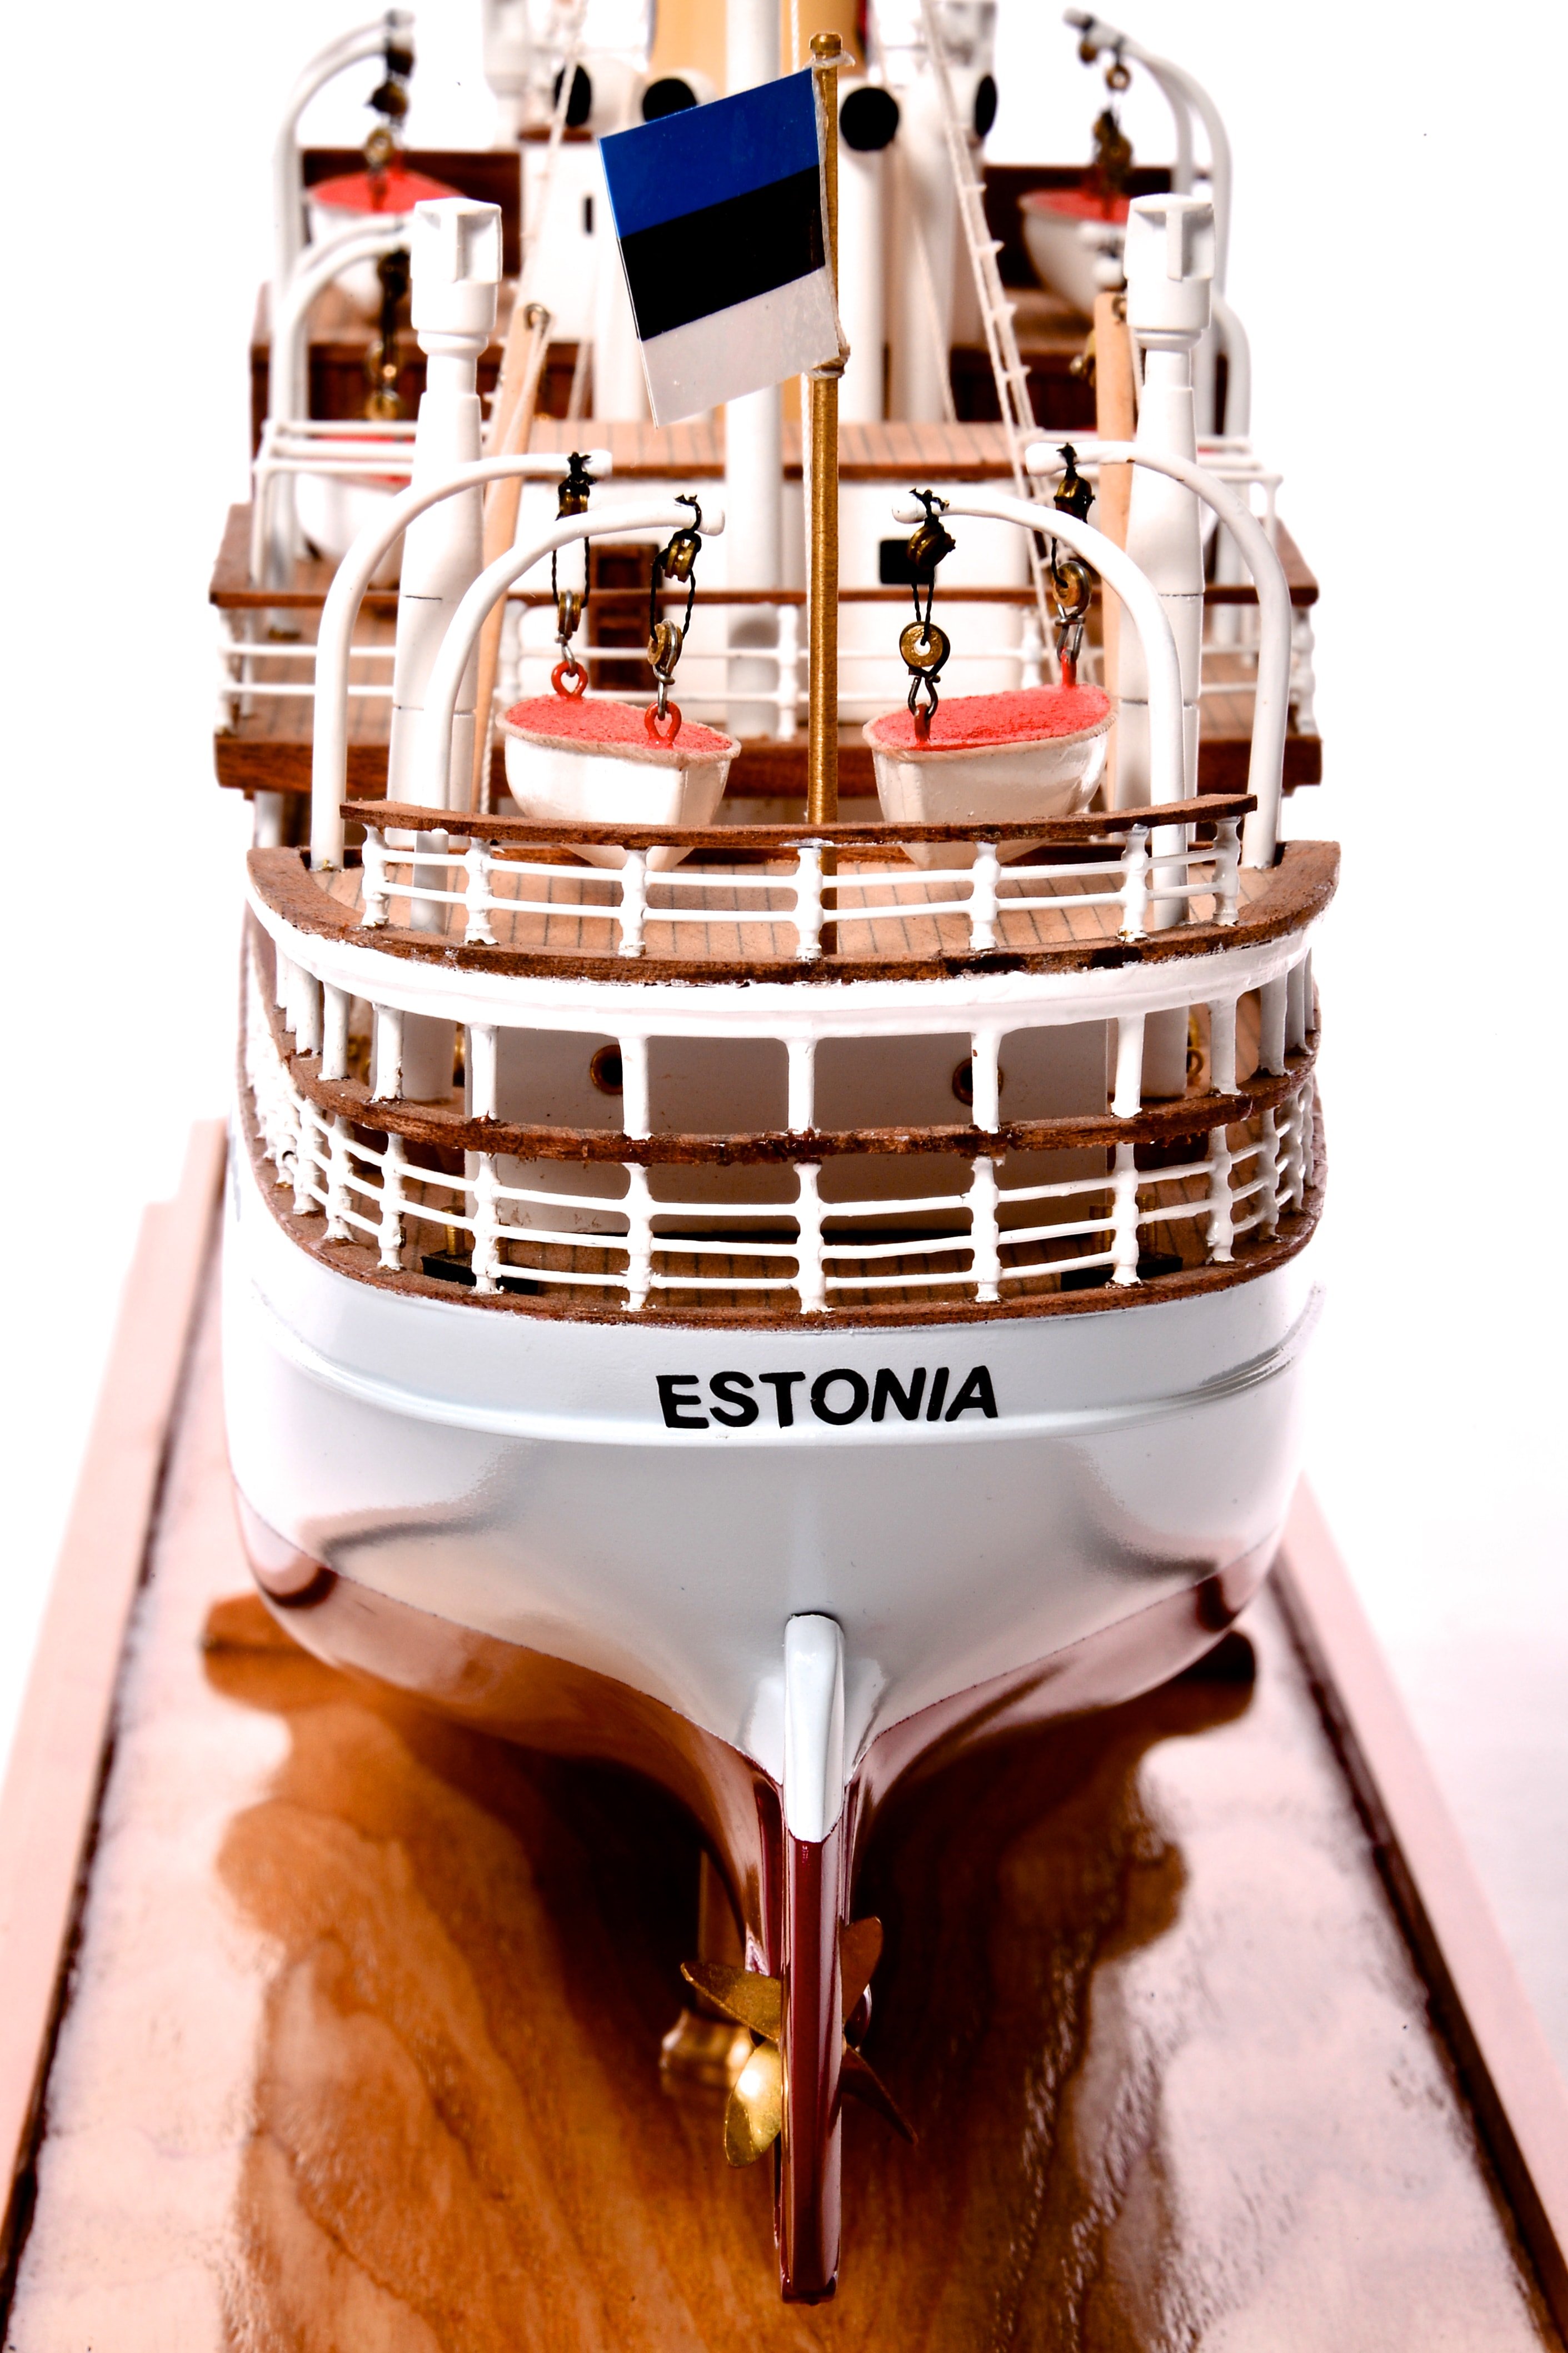 SS Estonia Passenger Ship Model